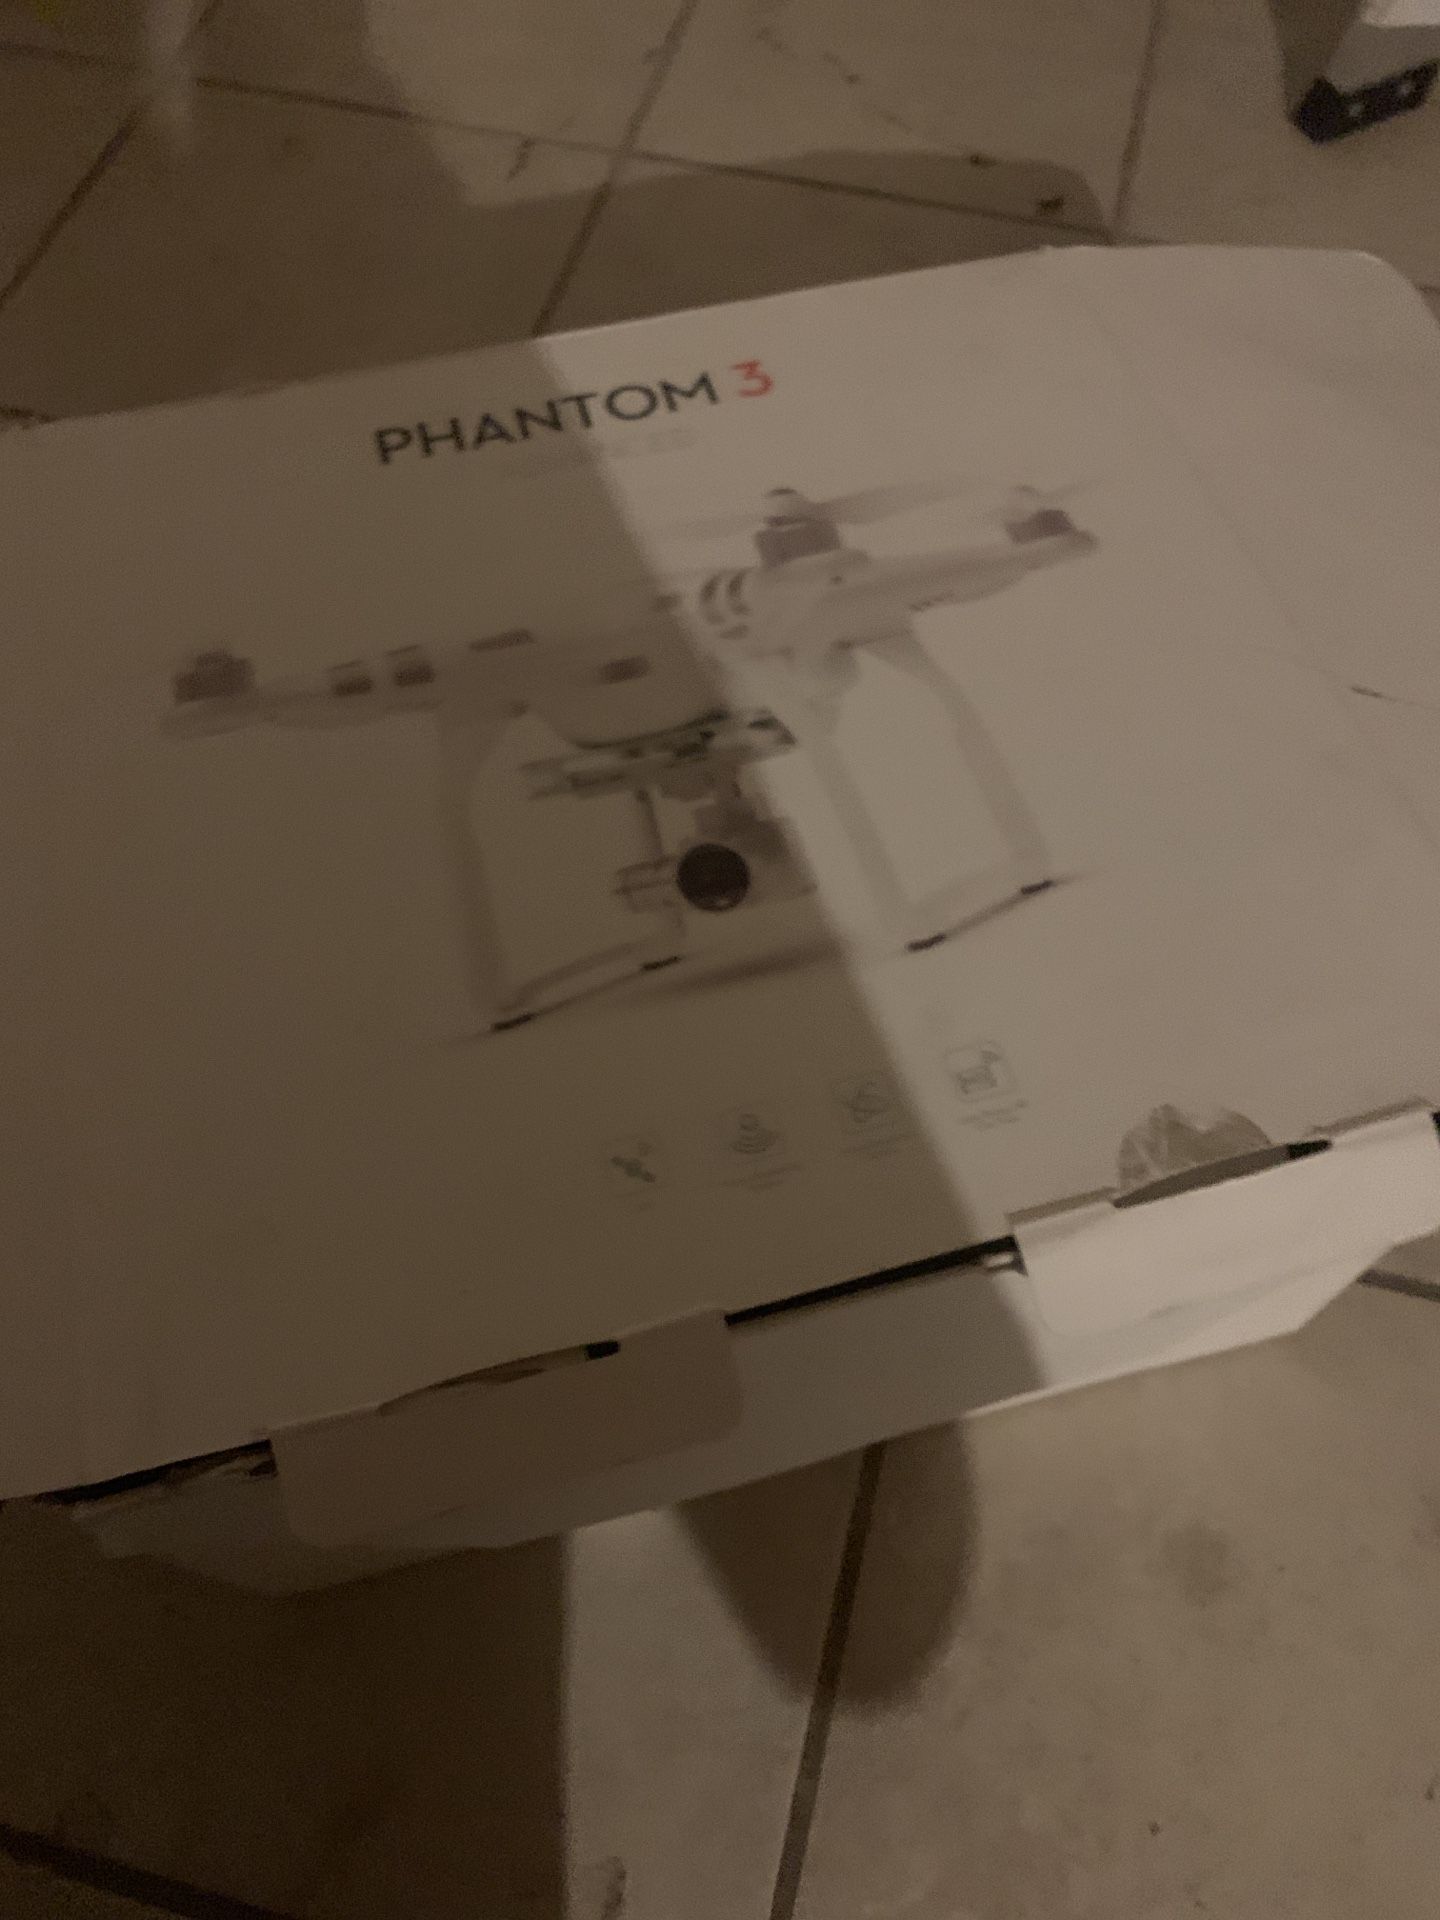 DJI phantom professional drone only